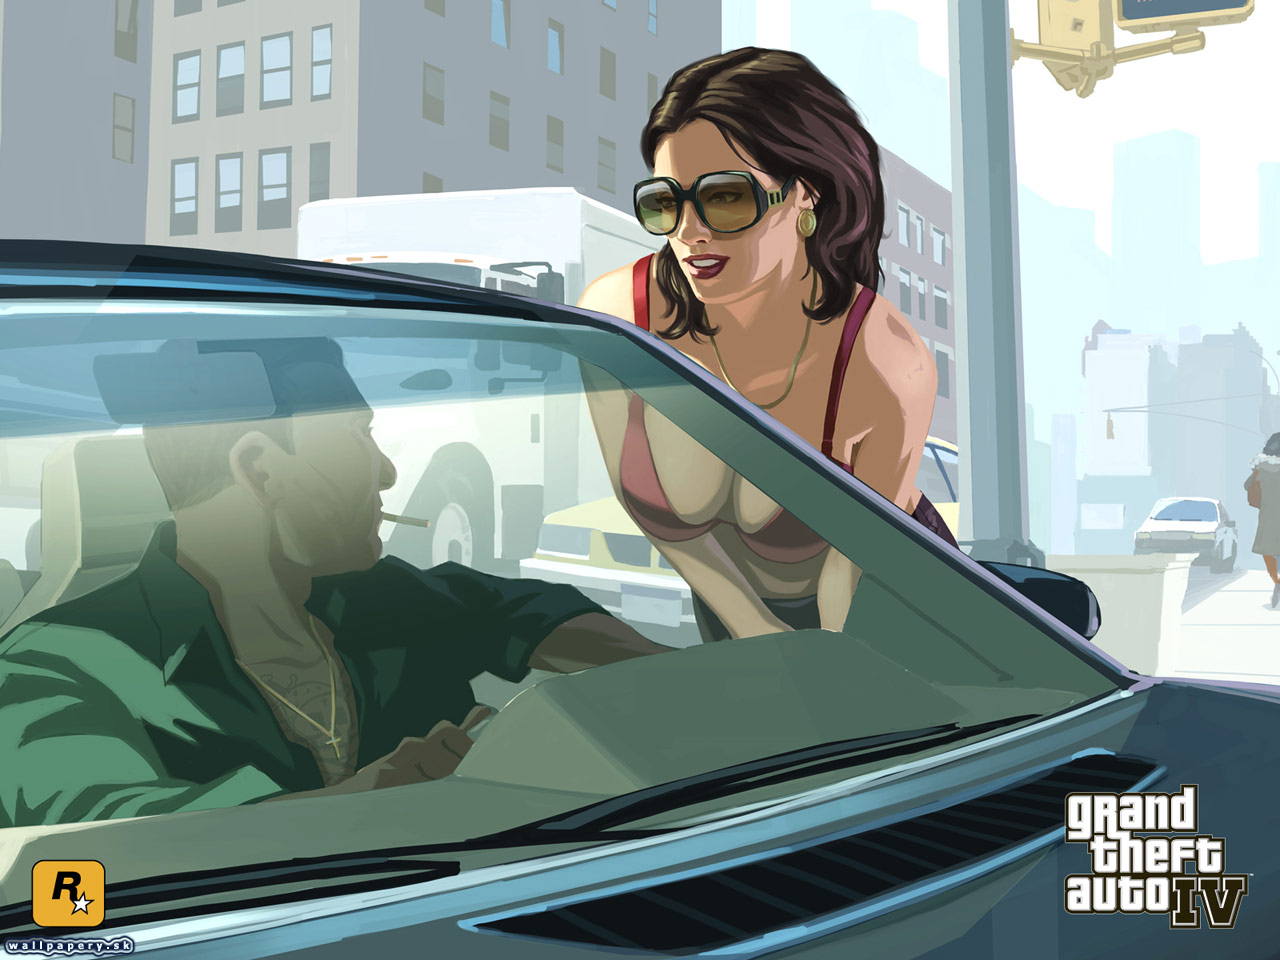 Grand Theft Auto IV - wallpaper 10